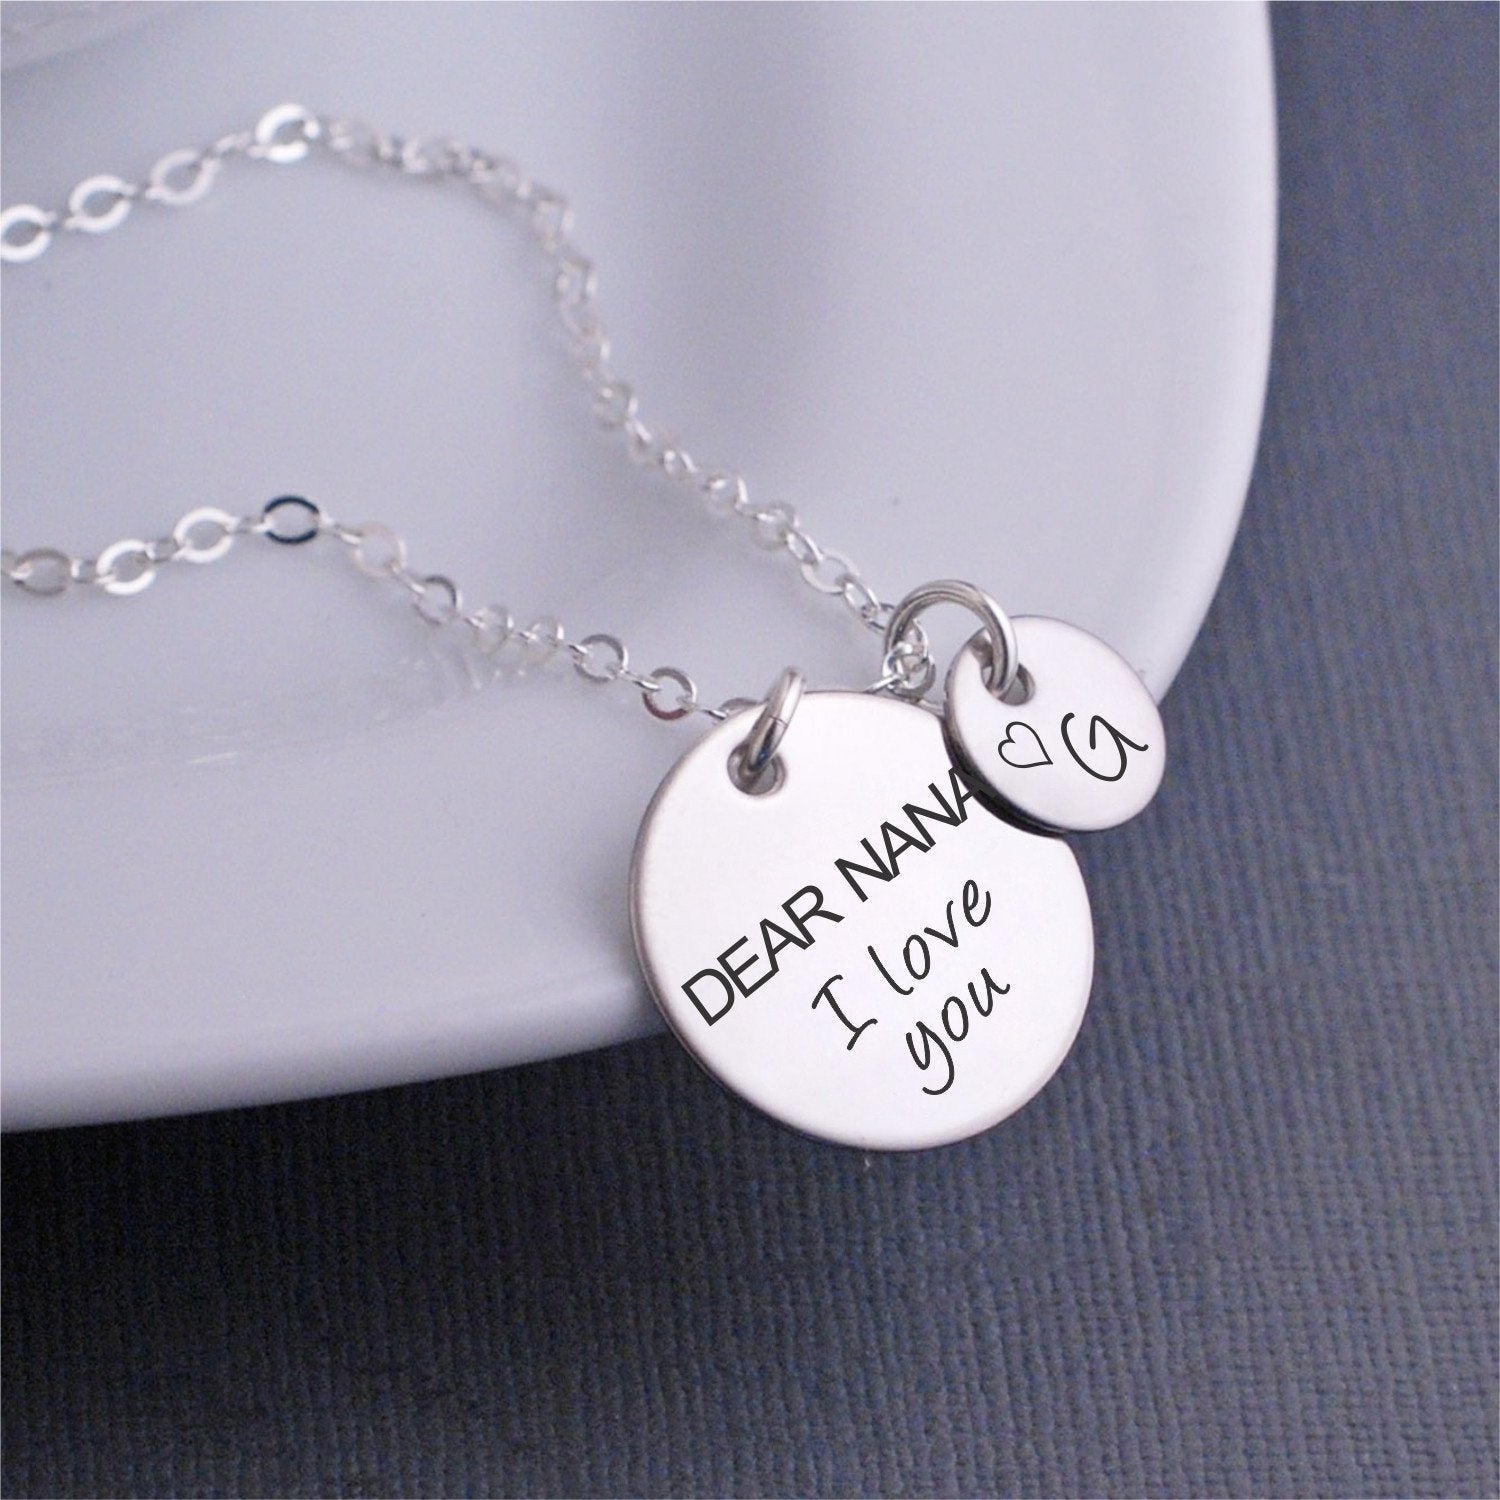 Dear Nana: I Love You' - Personalized Necklace - Love, Georgie